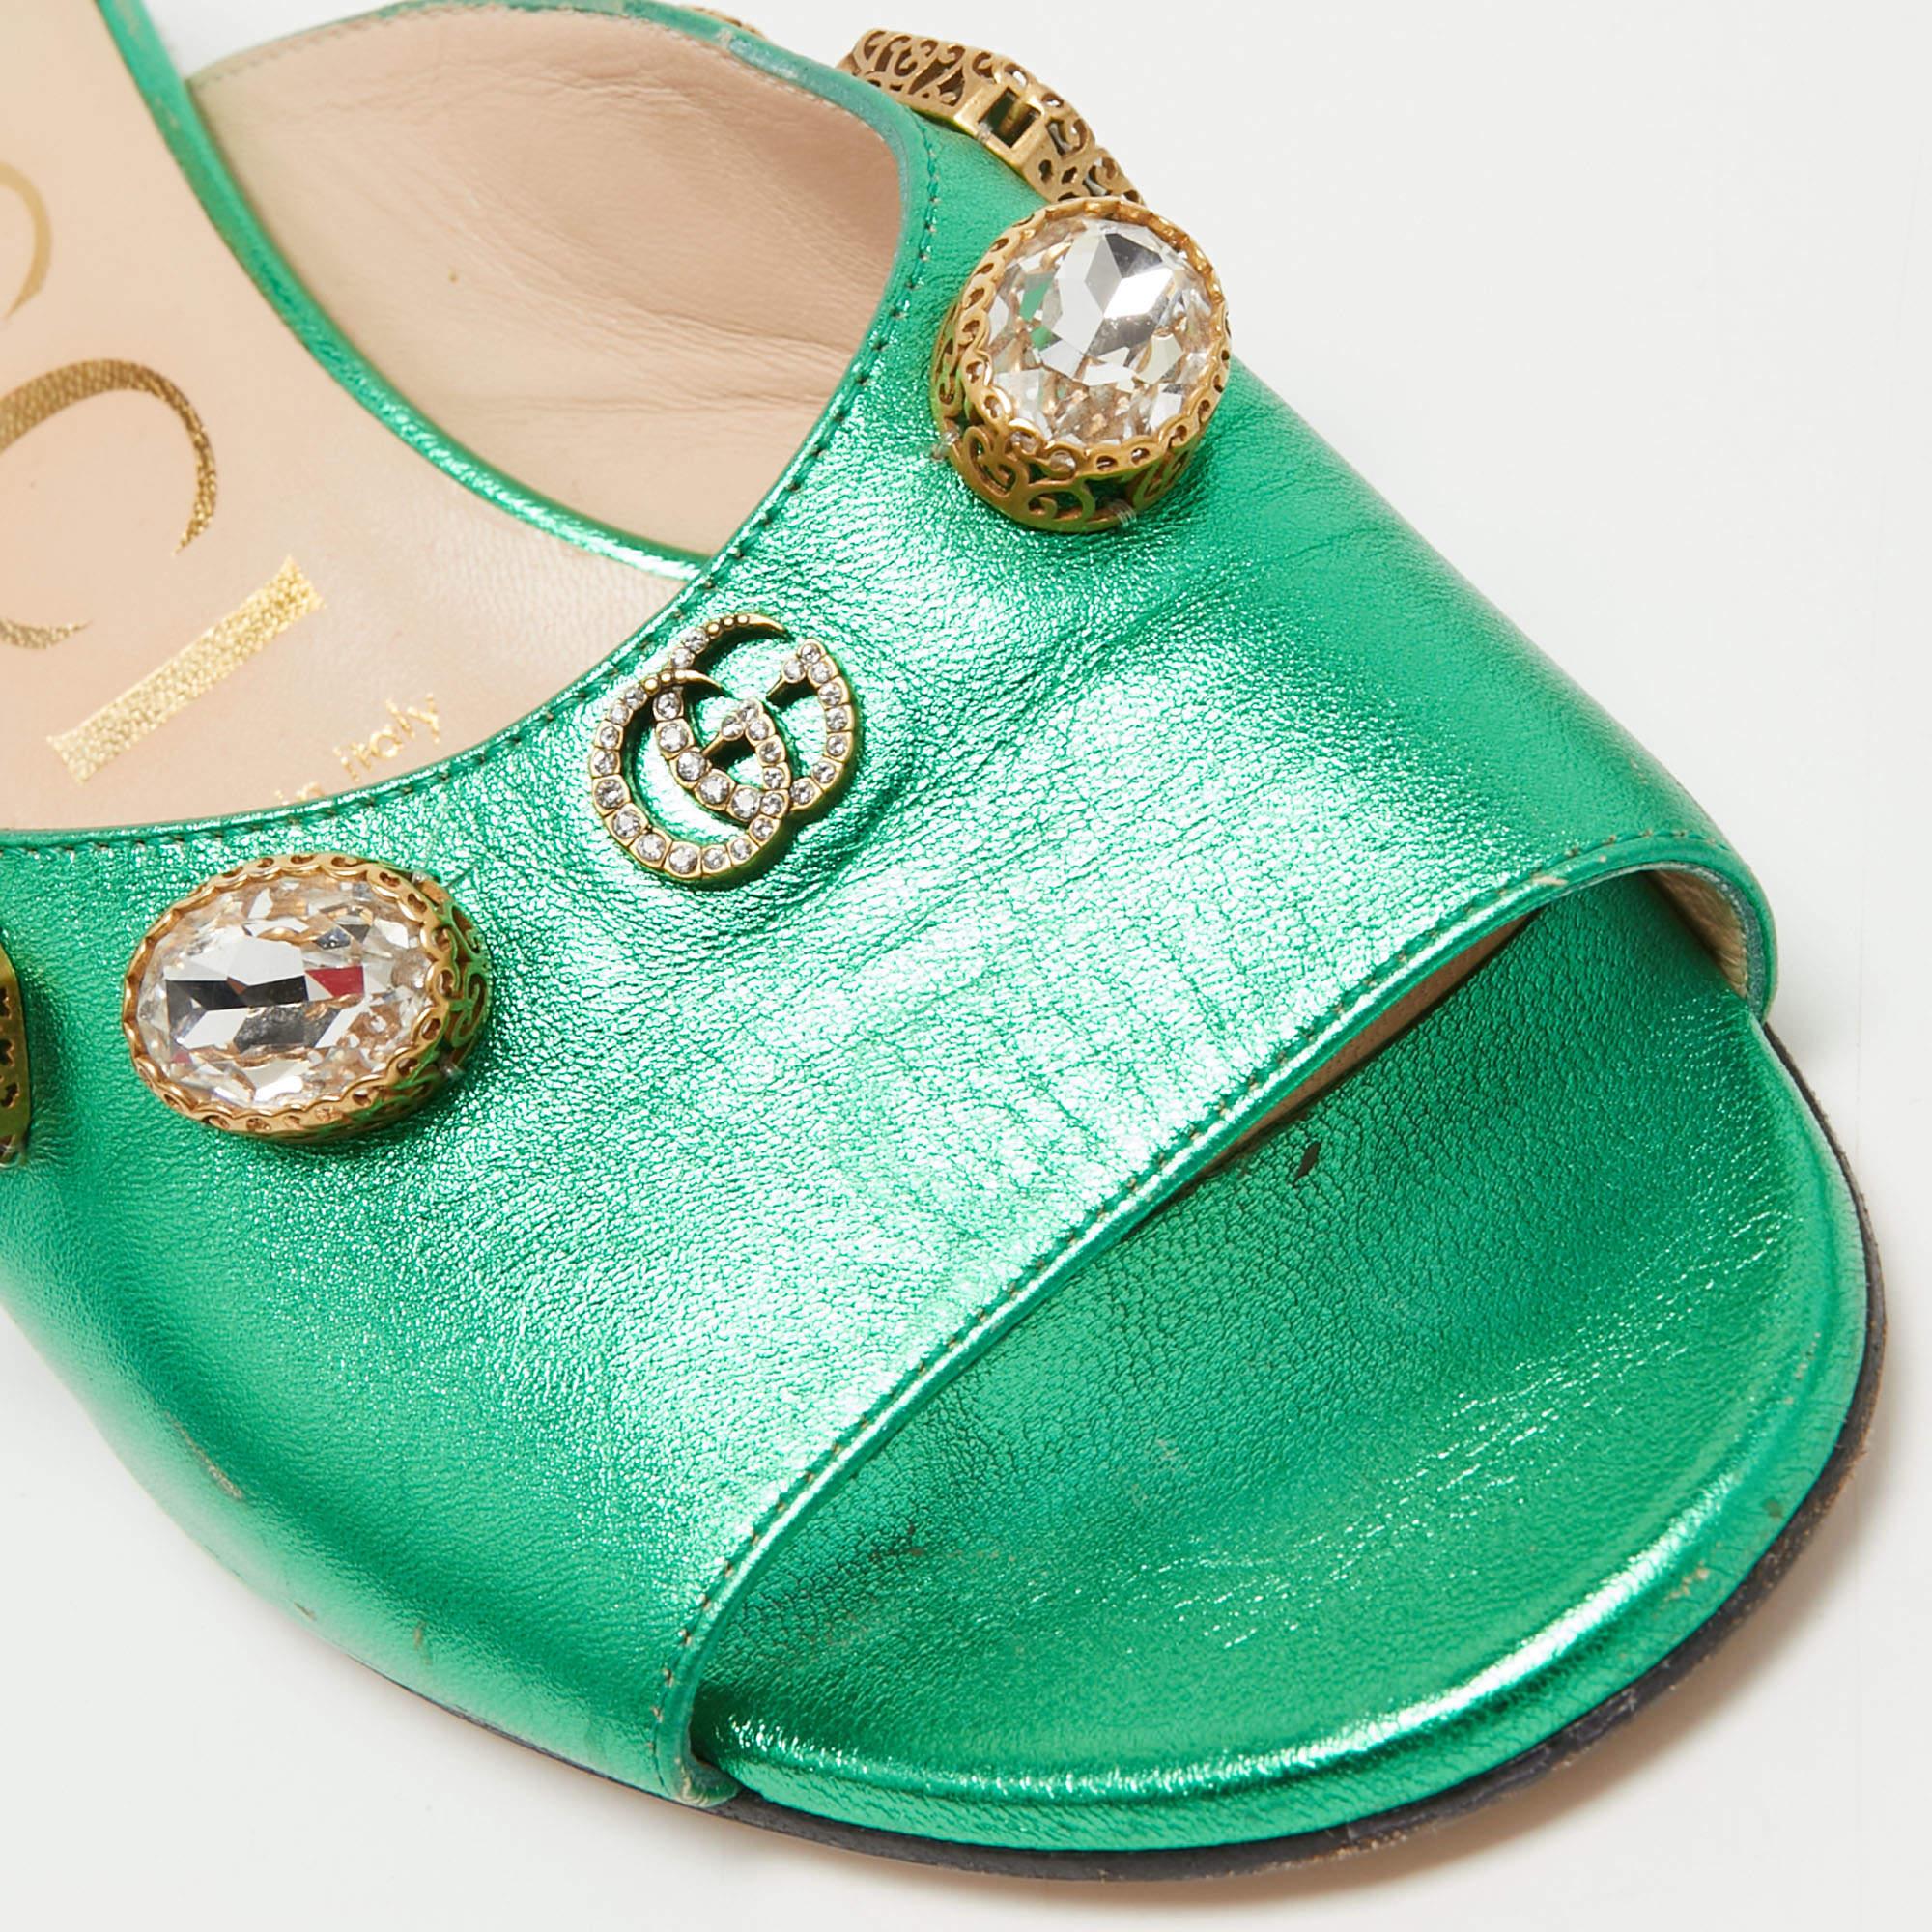 Gucci Metallic Green Leather Crystal Embellished Slide Sandals Size 36 1